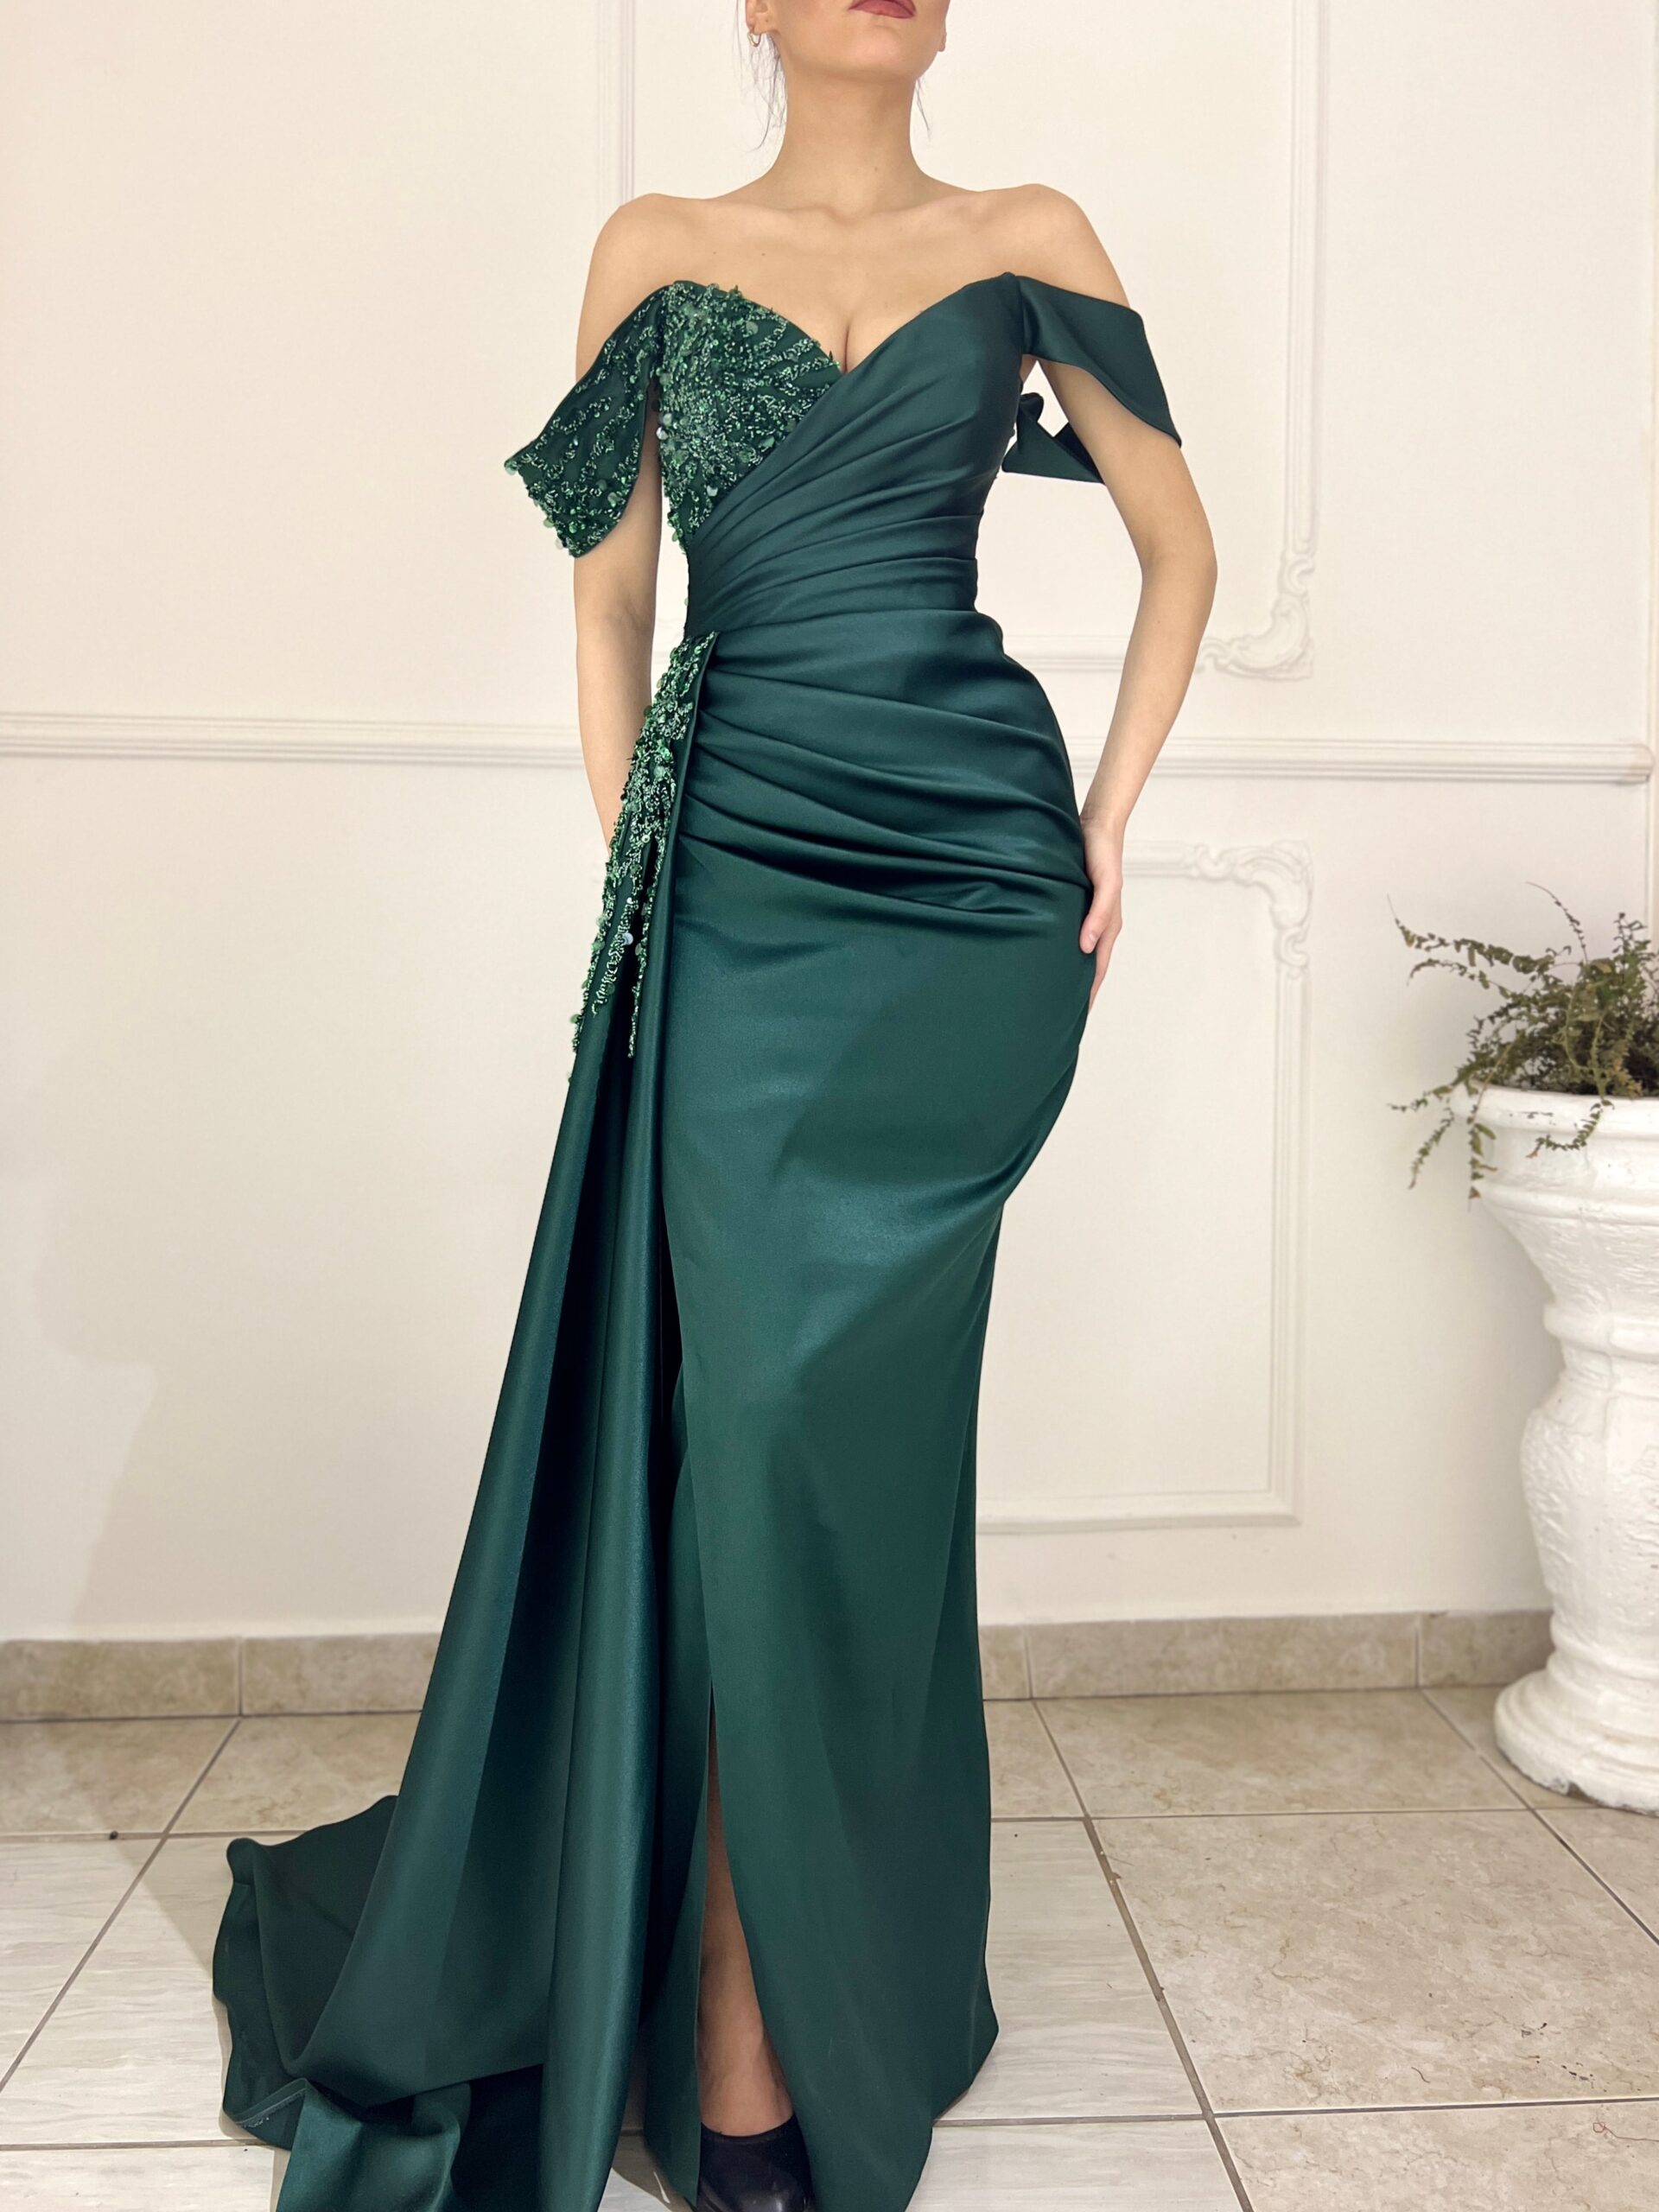 Jade dress – Emin Jaha